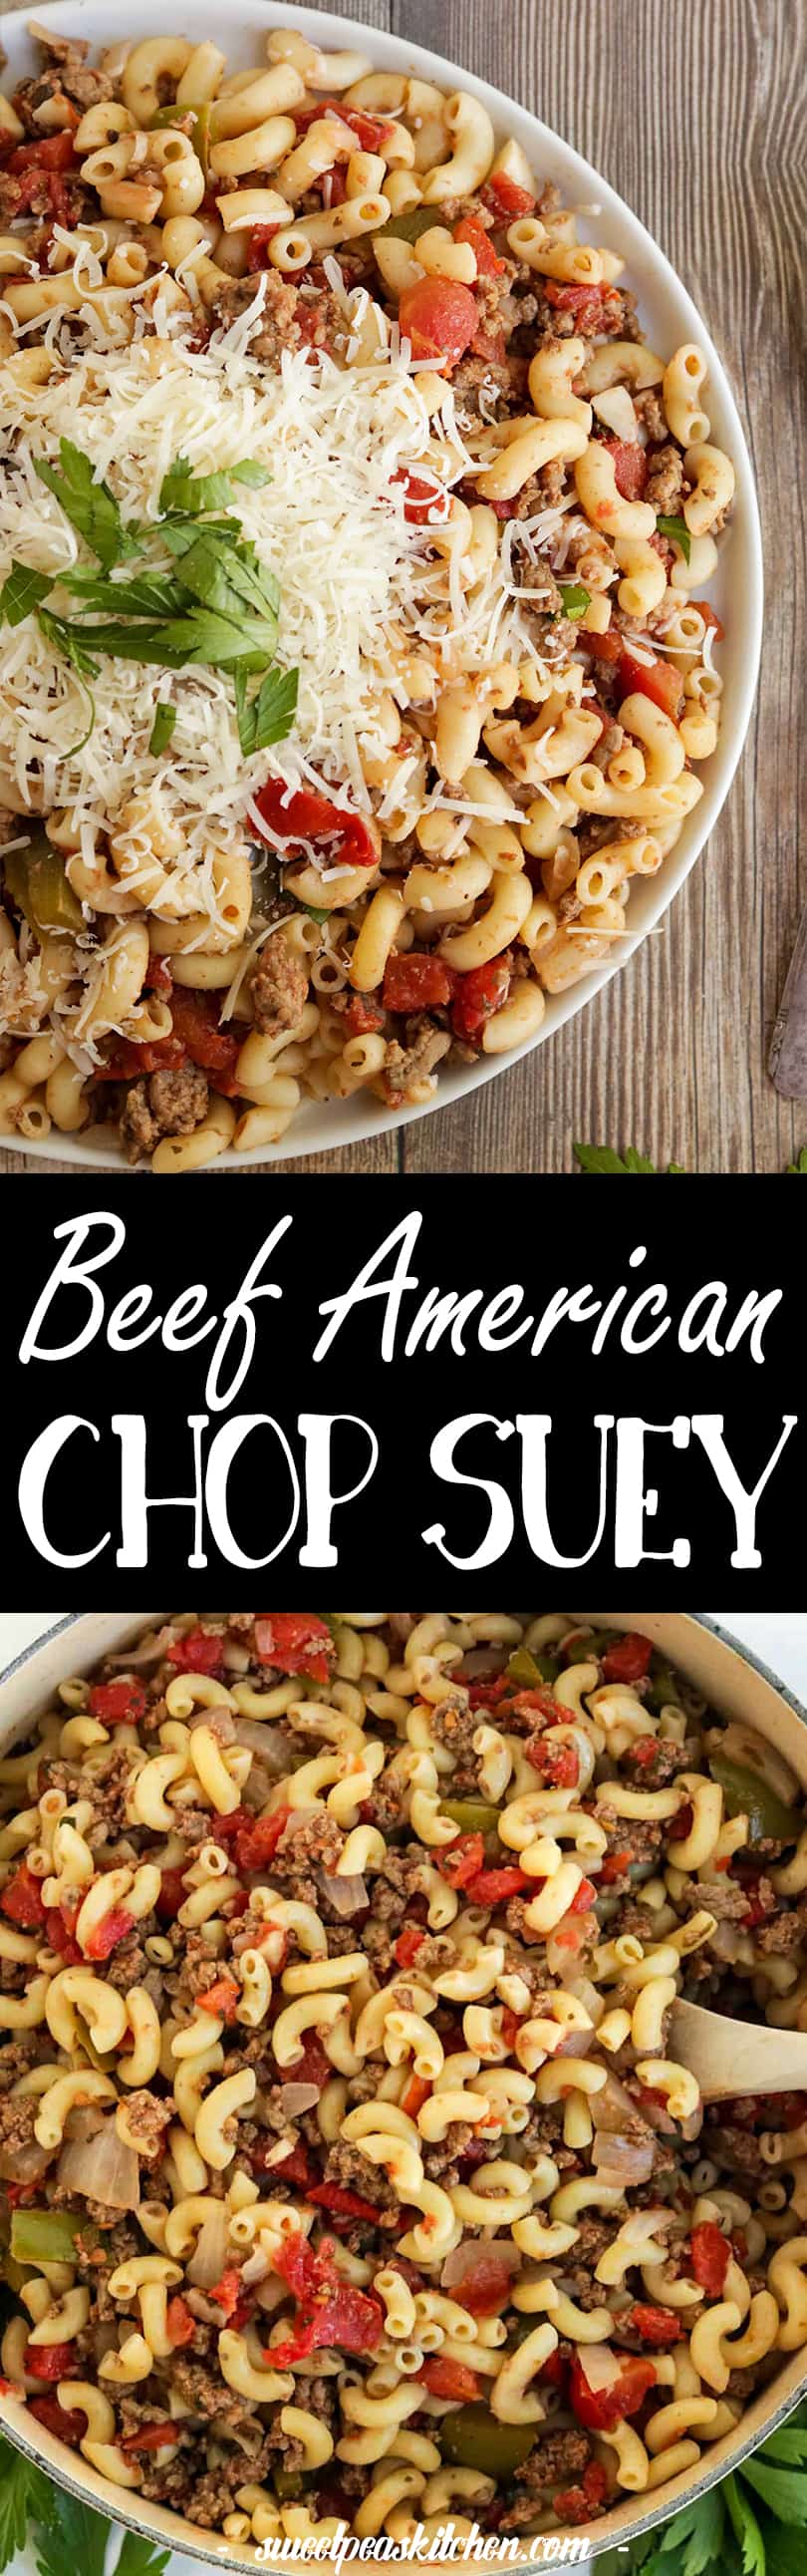 american chop suey recipe large crowd